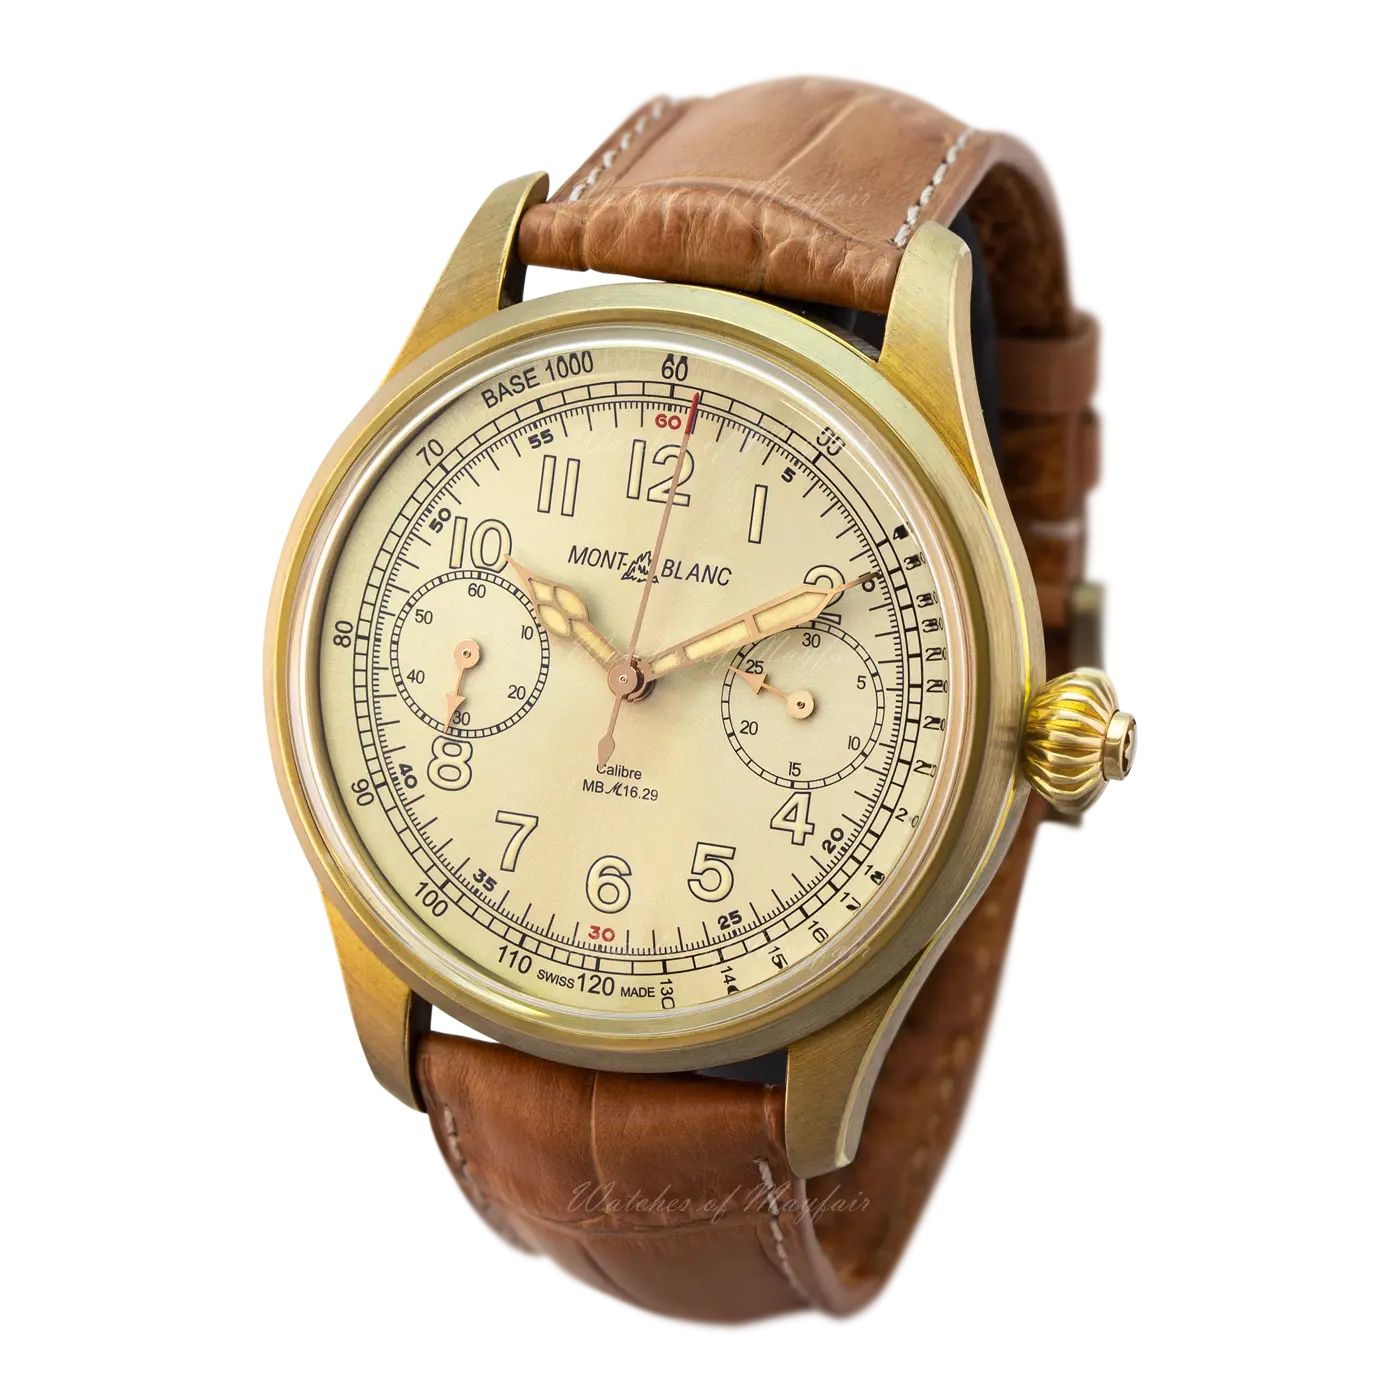 Montblance 1858 Chronograph men's watch